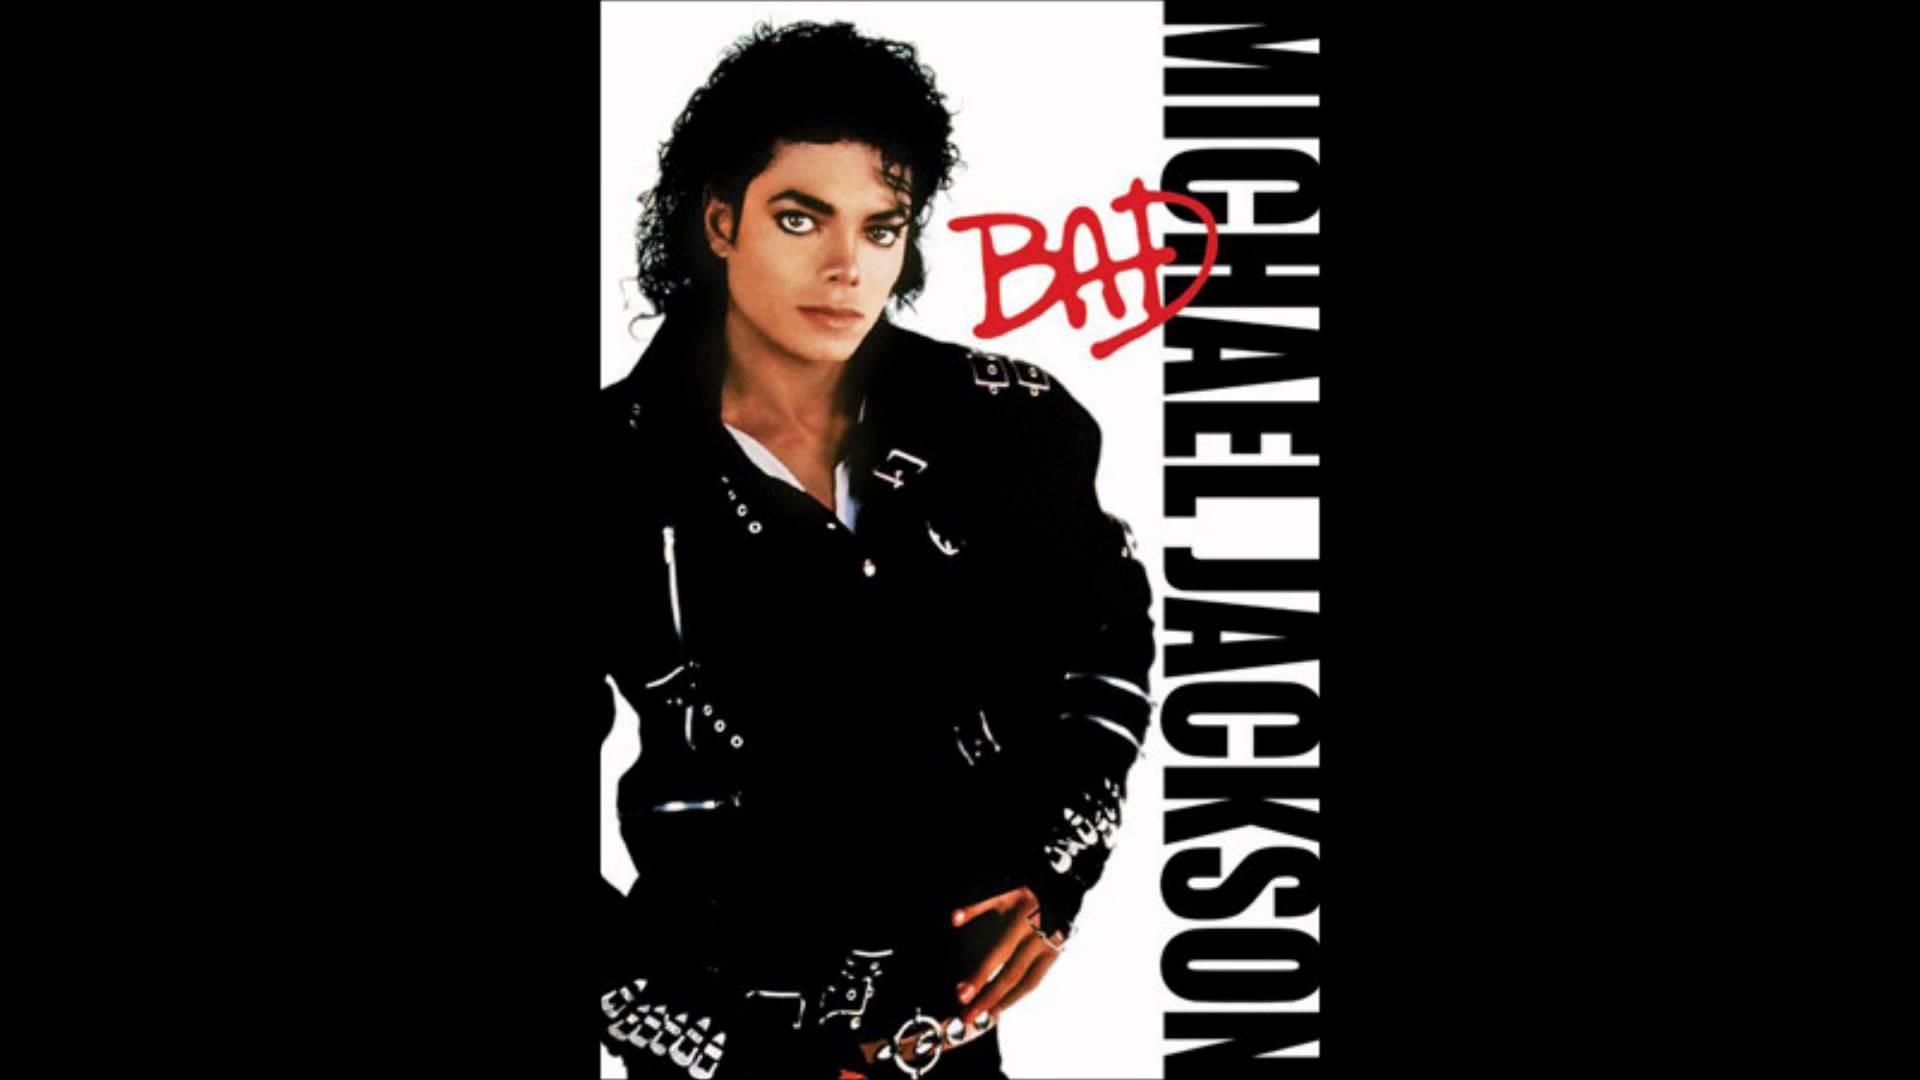 Michael jackson albums. Michael Jackson Bad 1987 LP.